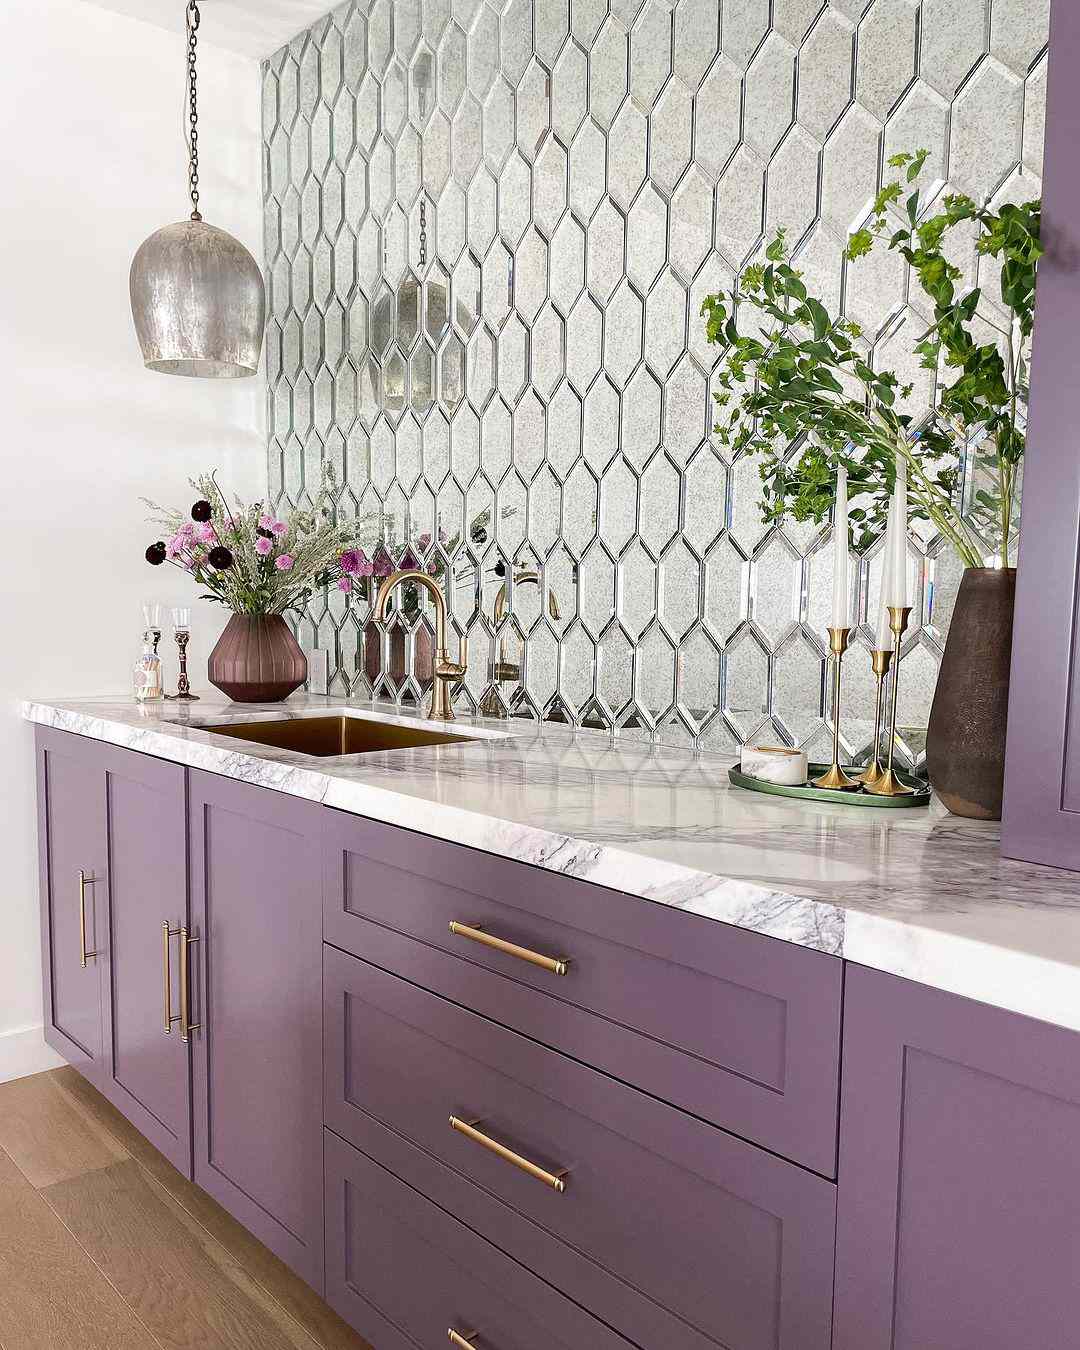 purple countertops and mirrored backsplash